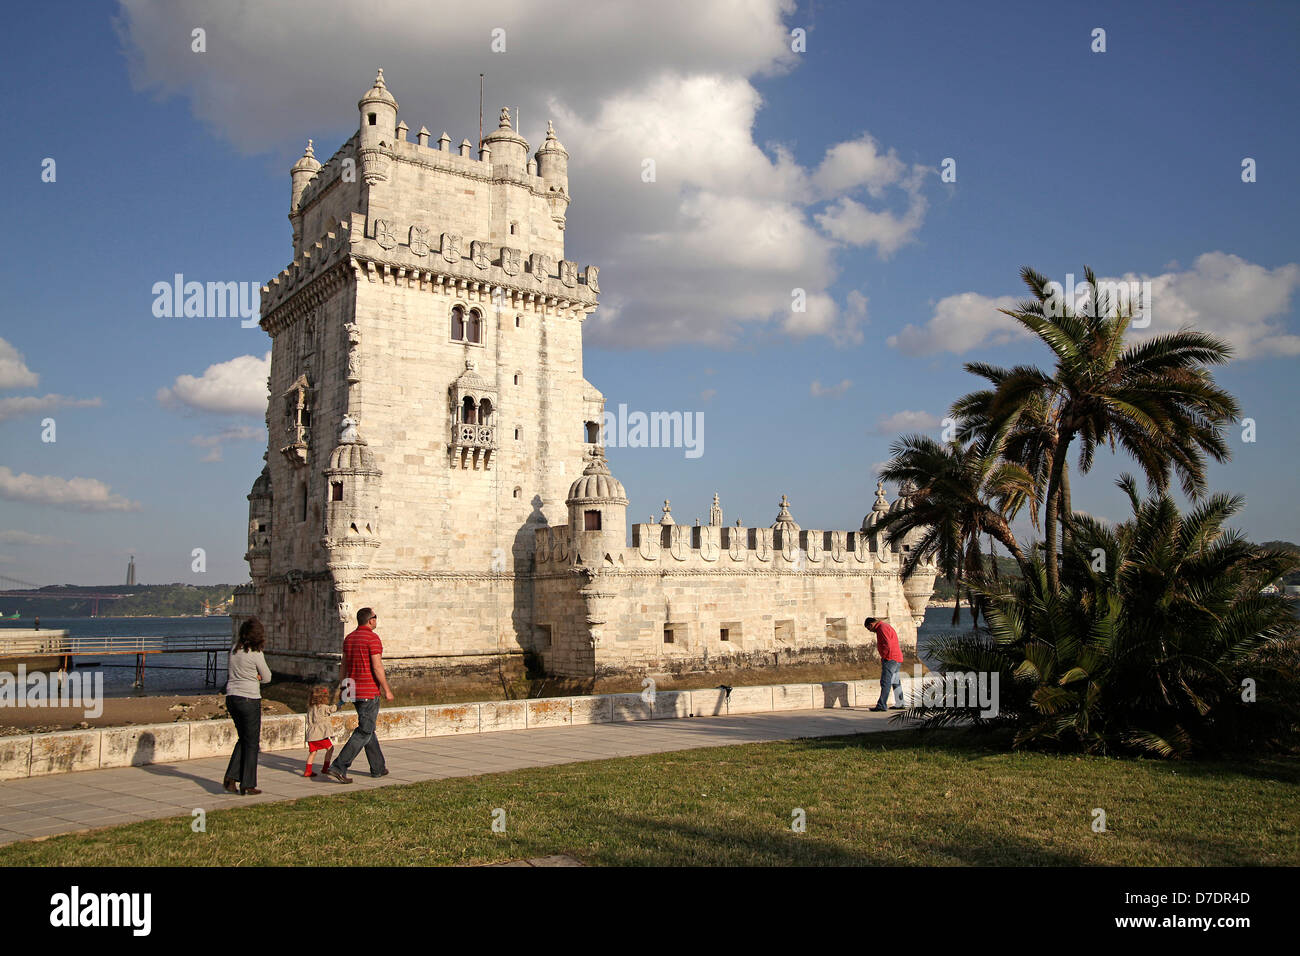 Icona La Torre di Belem la Torre de Belem, esempio prominente del portoghese stile manuelino in Belem, Lisboa Foto Stock